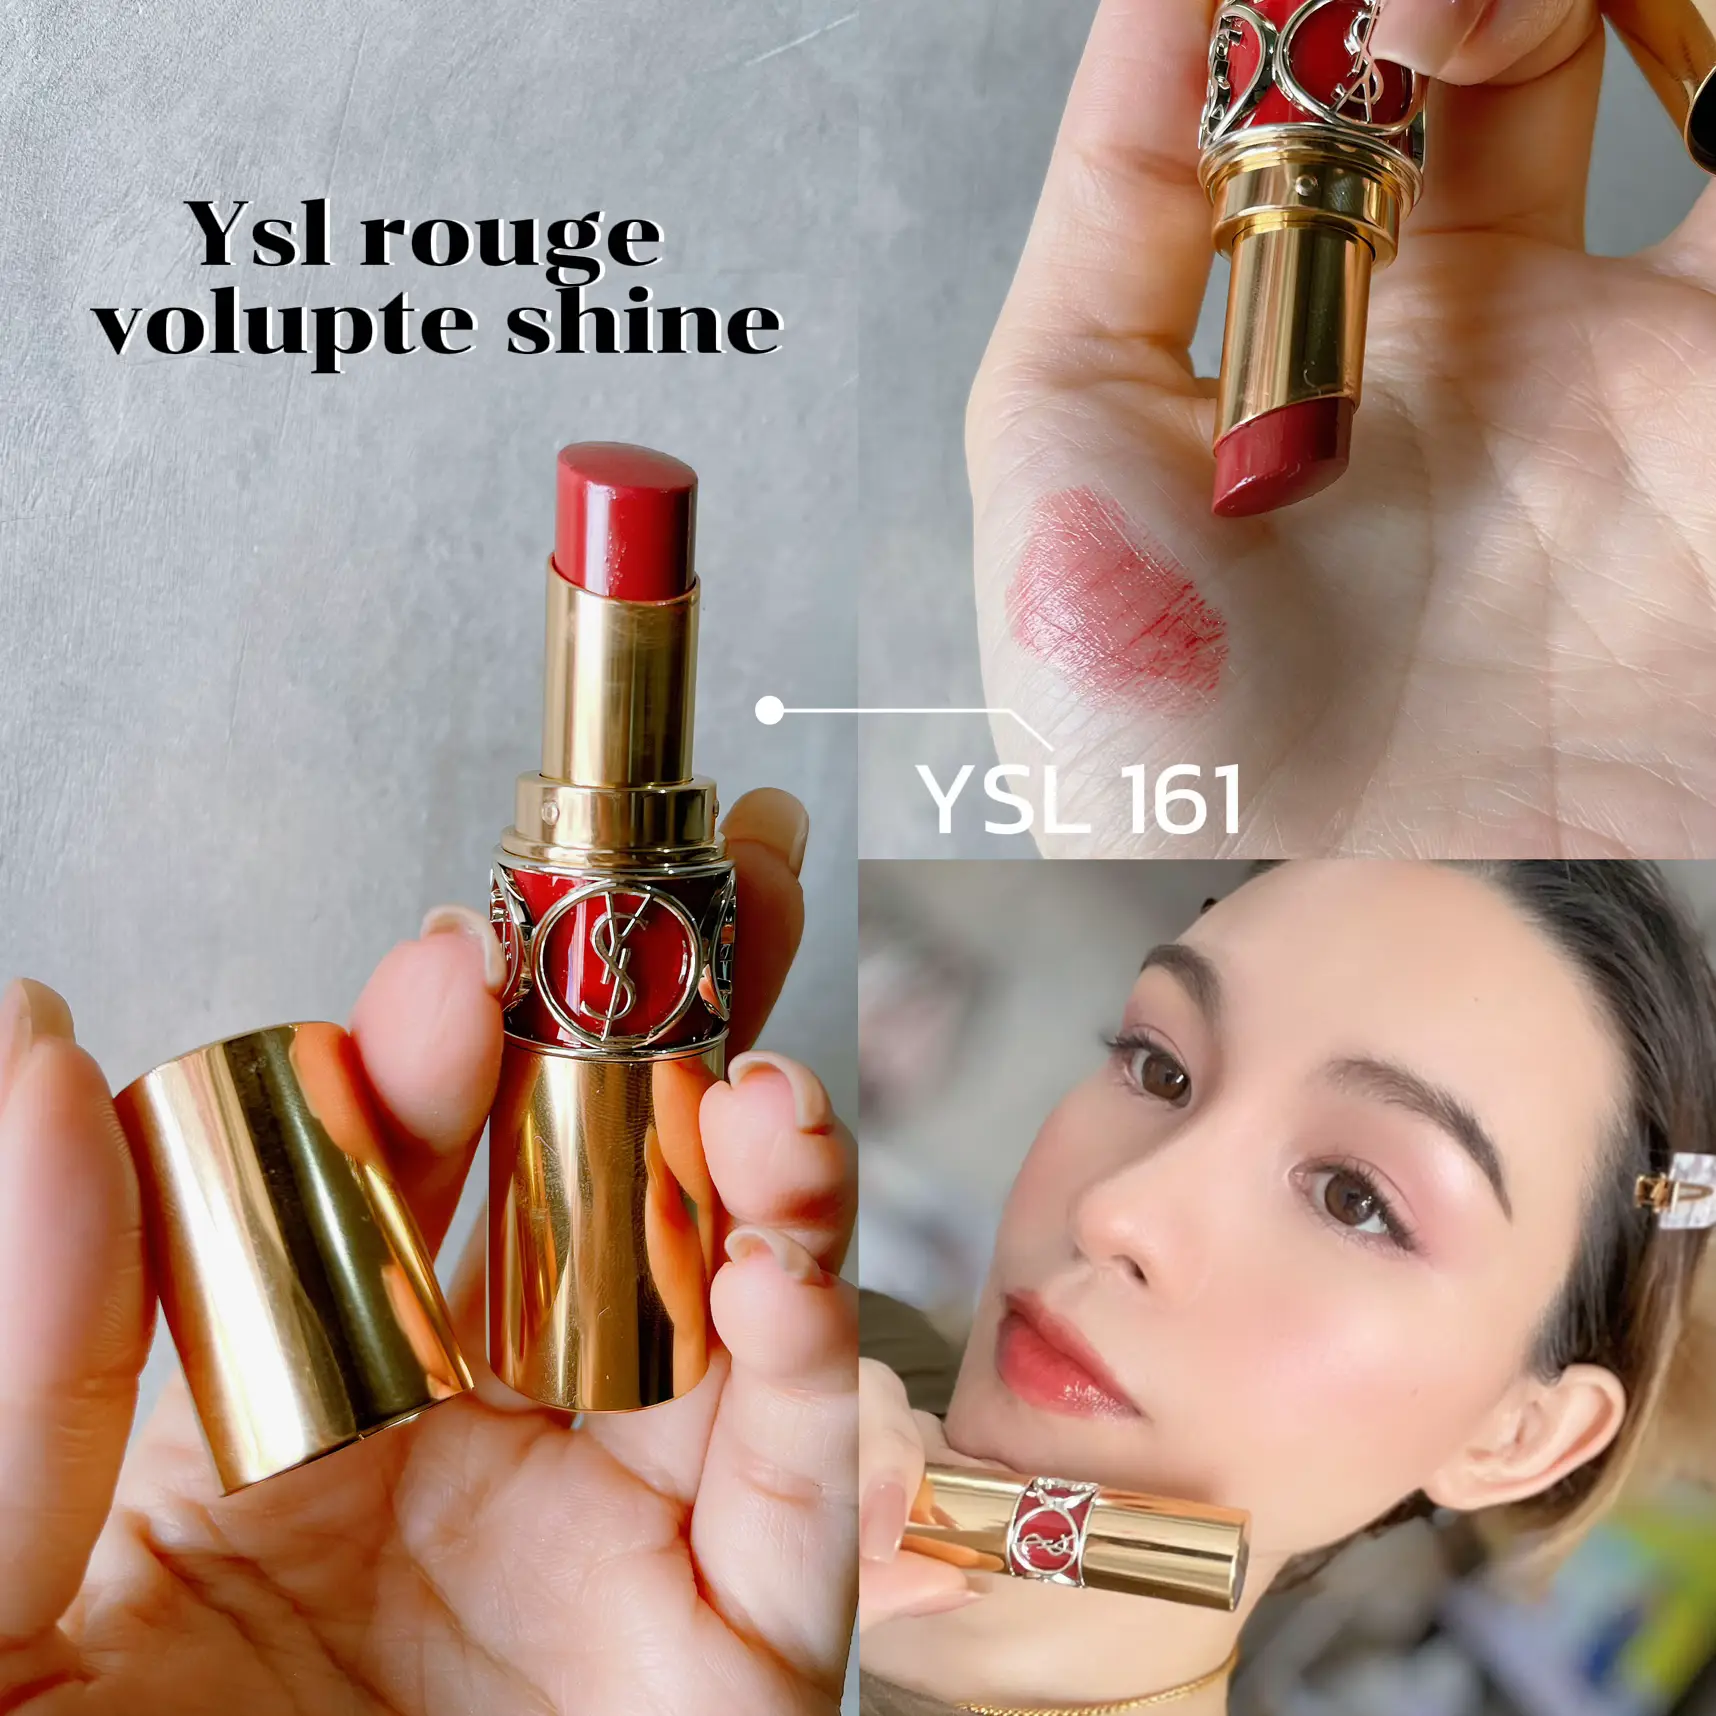 Ysl rouge volupte shine lipstick #161, แกลเลอรีที่โพสต์โดย .𝐀